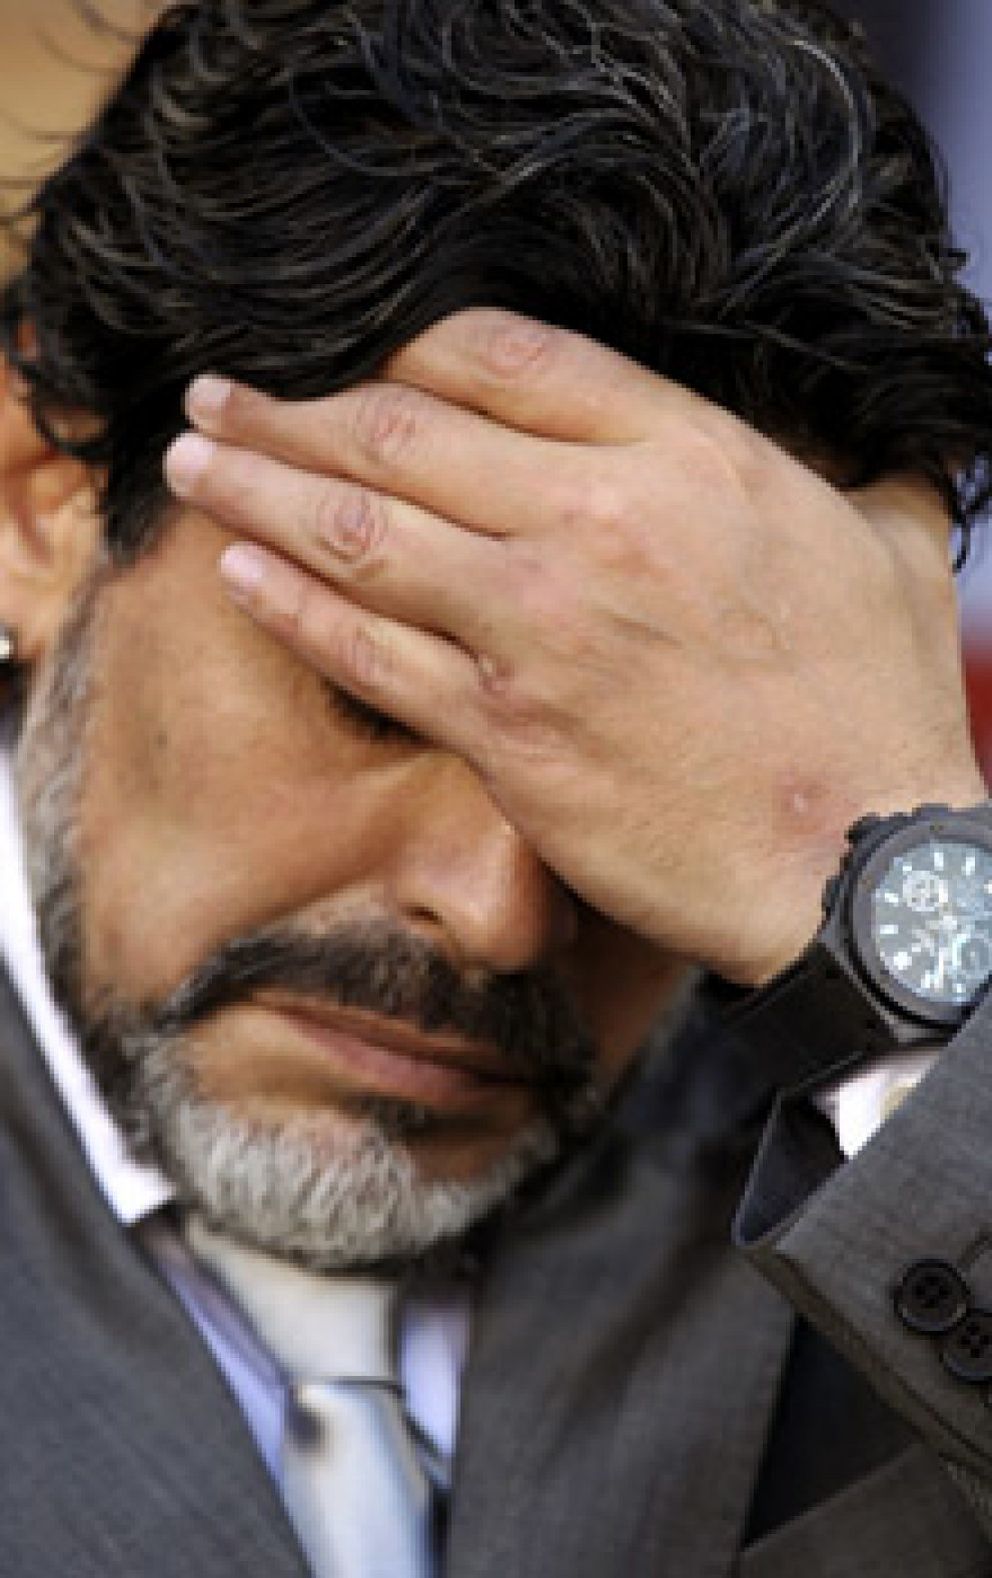 Foto: Grondona: "La continuidad de Maradona depende de él"